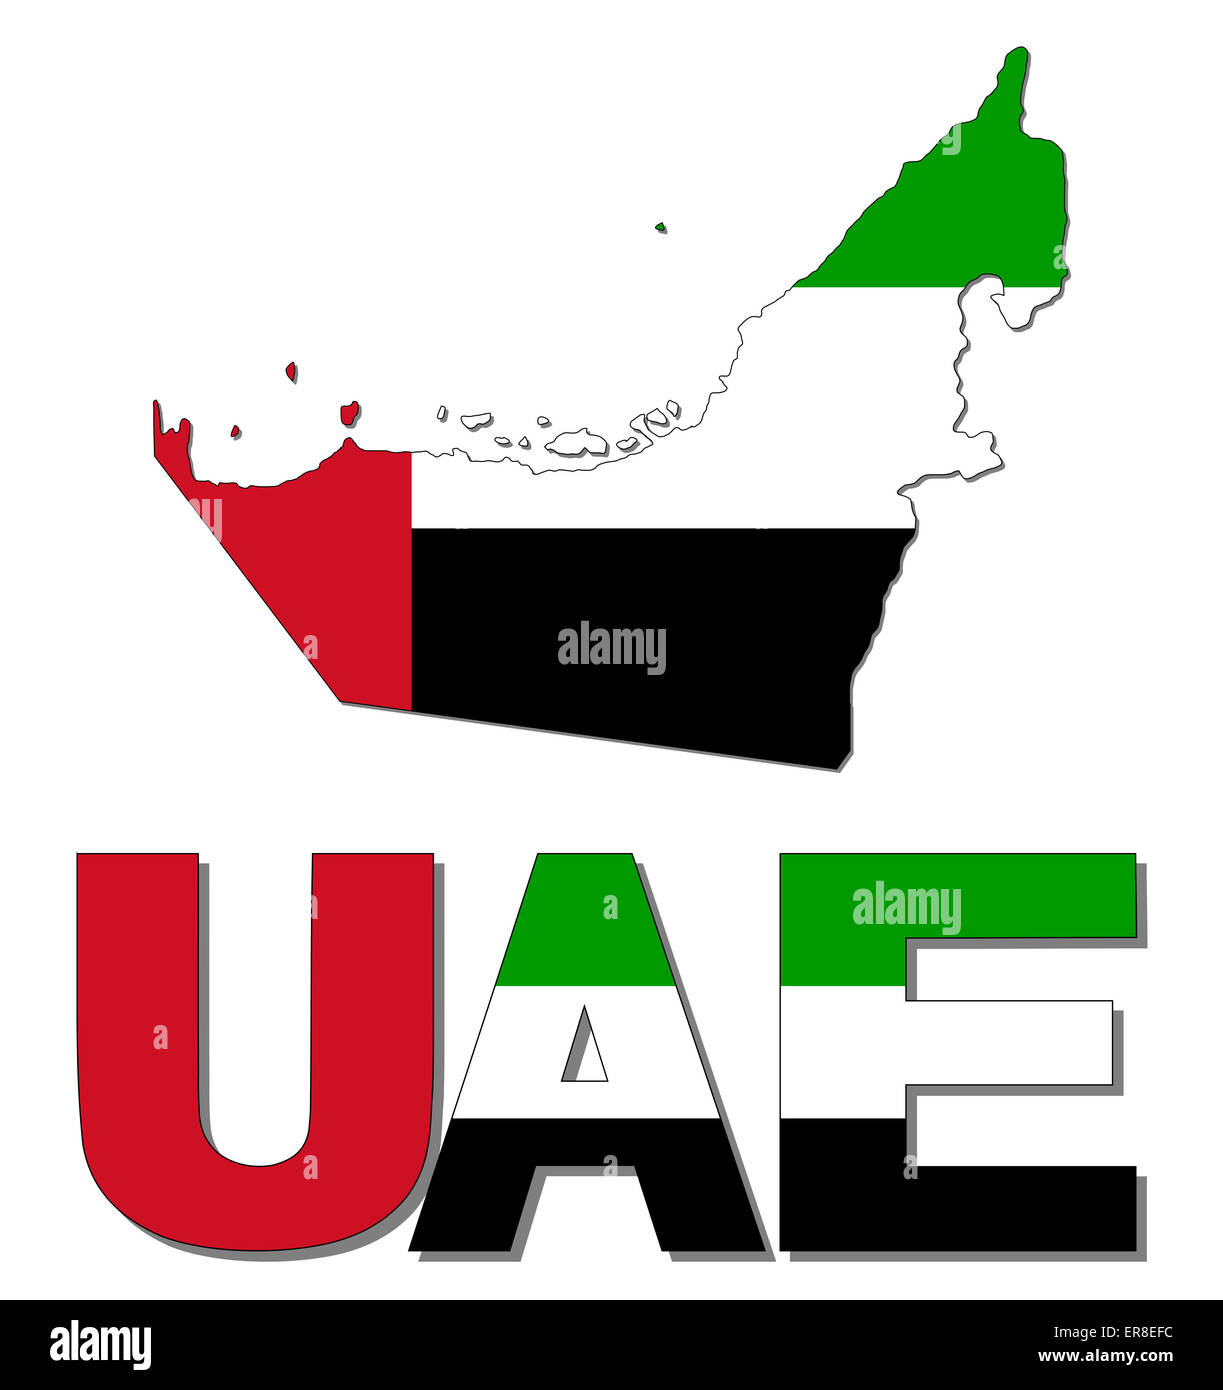 UAE map flag and text illustration Stock Photo